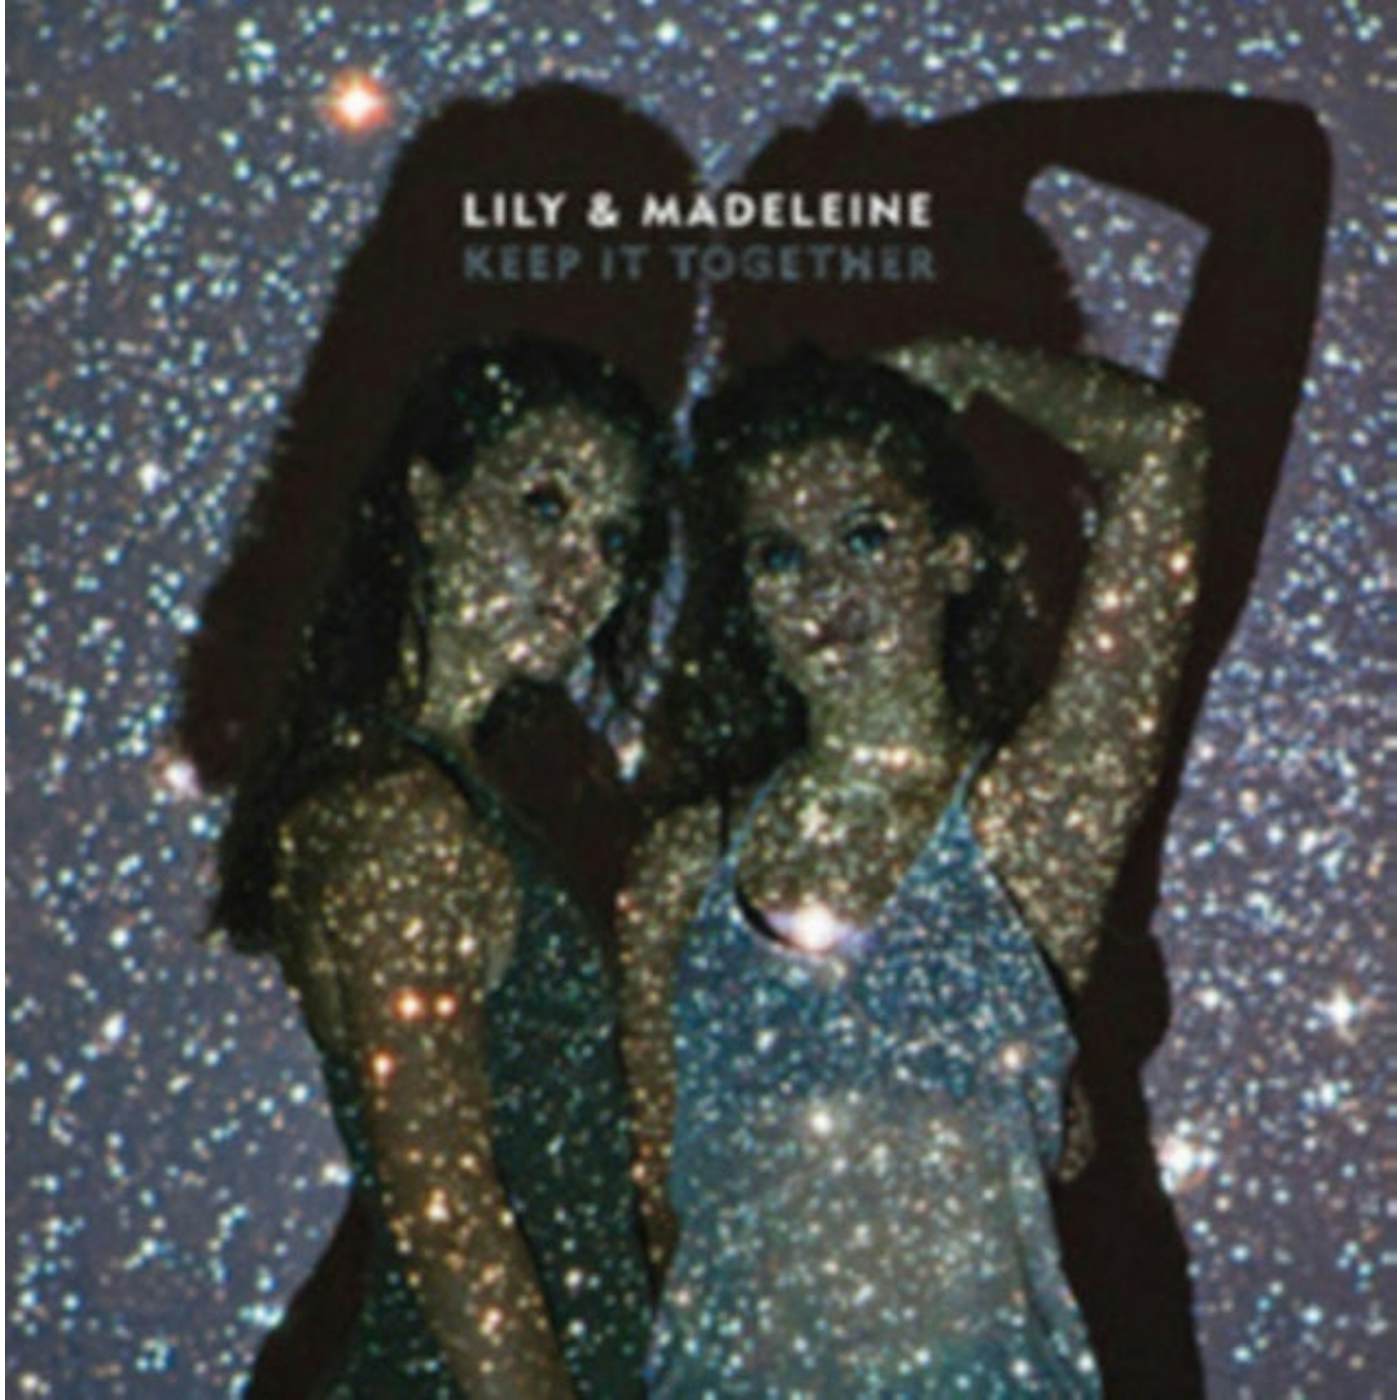 Lily & Madeleine LP - Keep It Together (Vinyl)